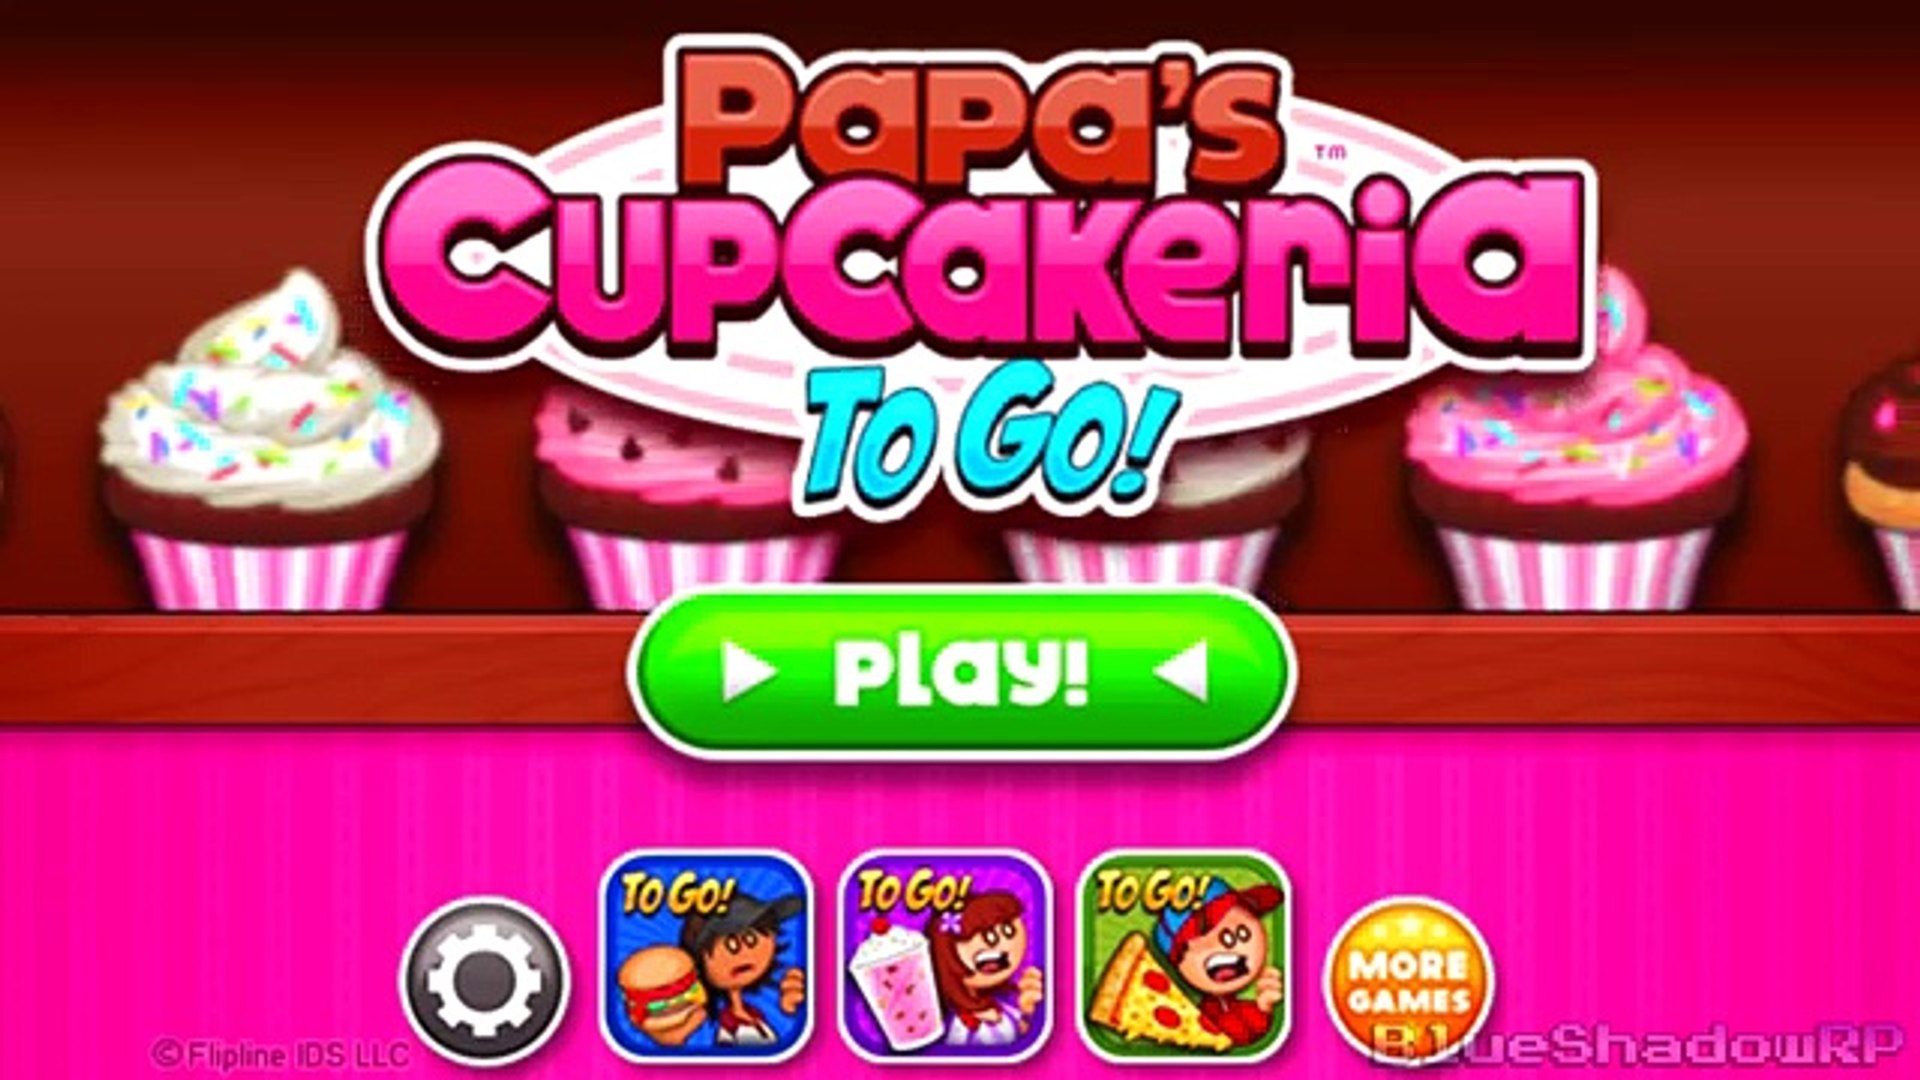 I burnt the Cupcakes! Papa's Cupcakeria Baking Game / Gamer Chad